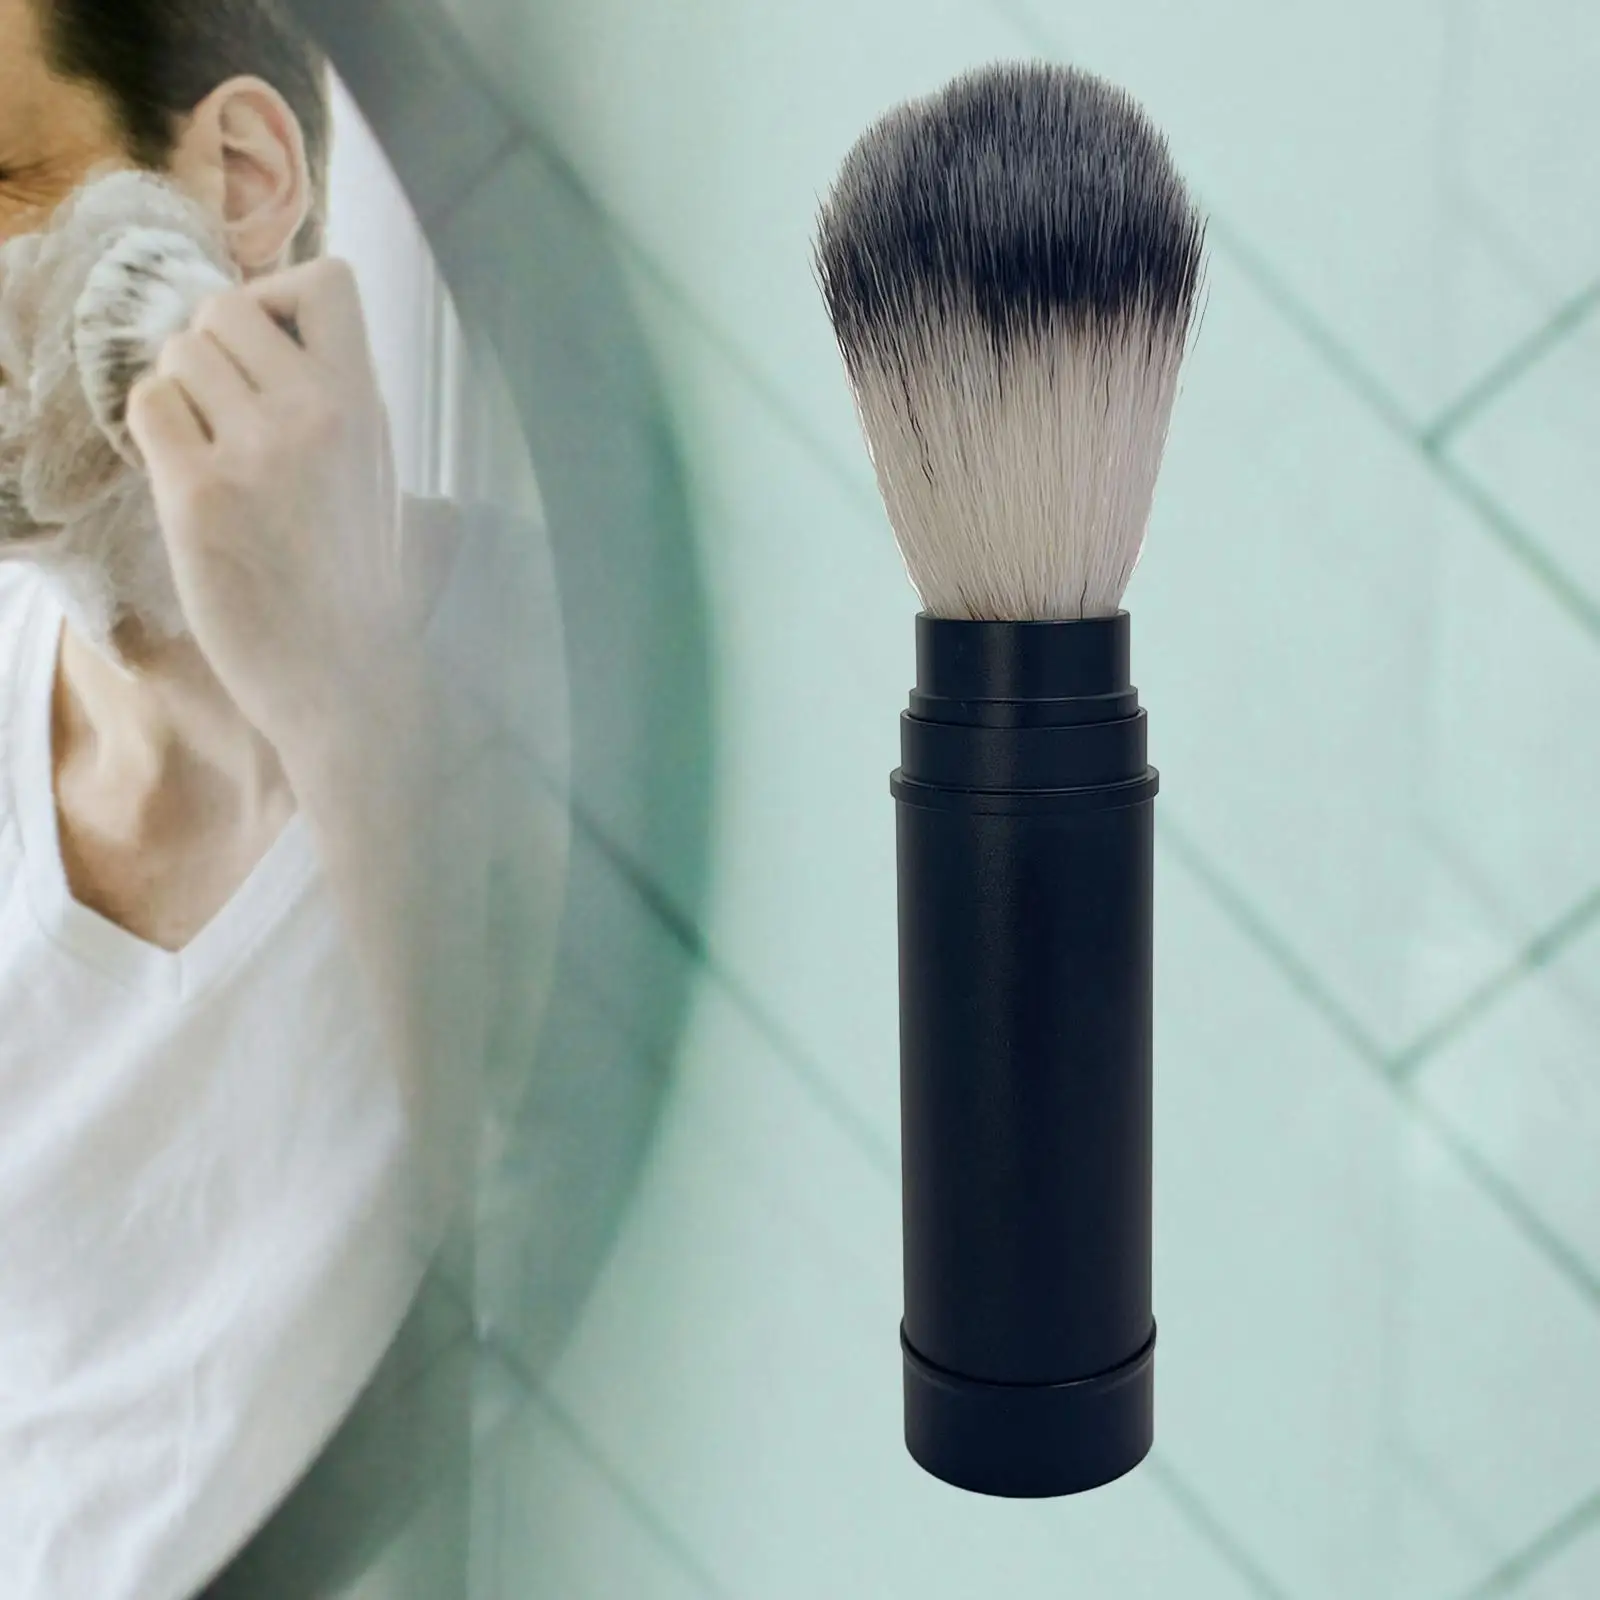 Shaving Brush Accessories for Home Travel Lightweight Facial Beard Cleaning Beard Shaving Brush for Home Travel Barbershop Salon